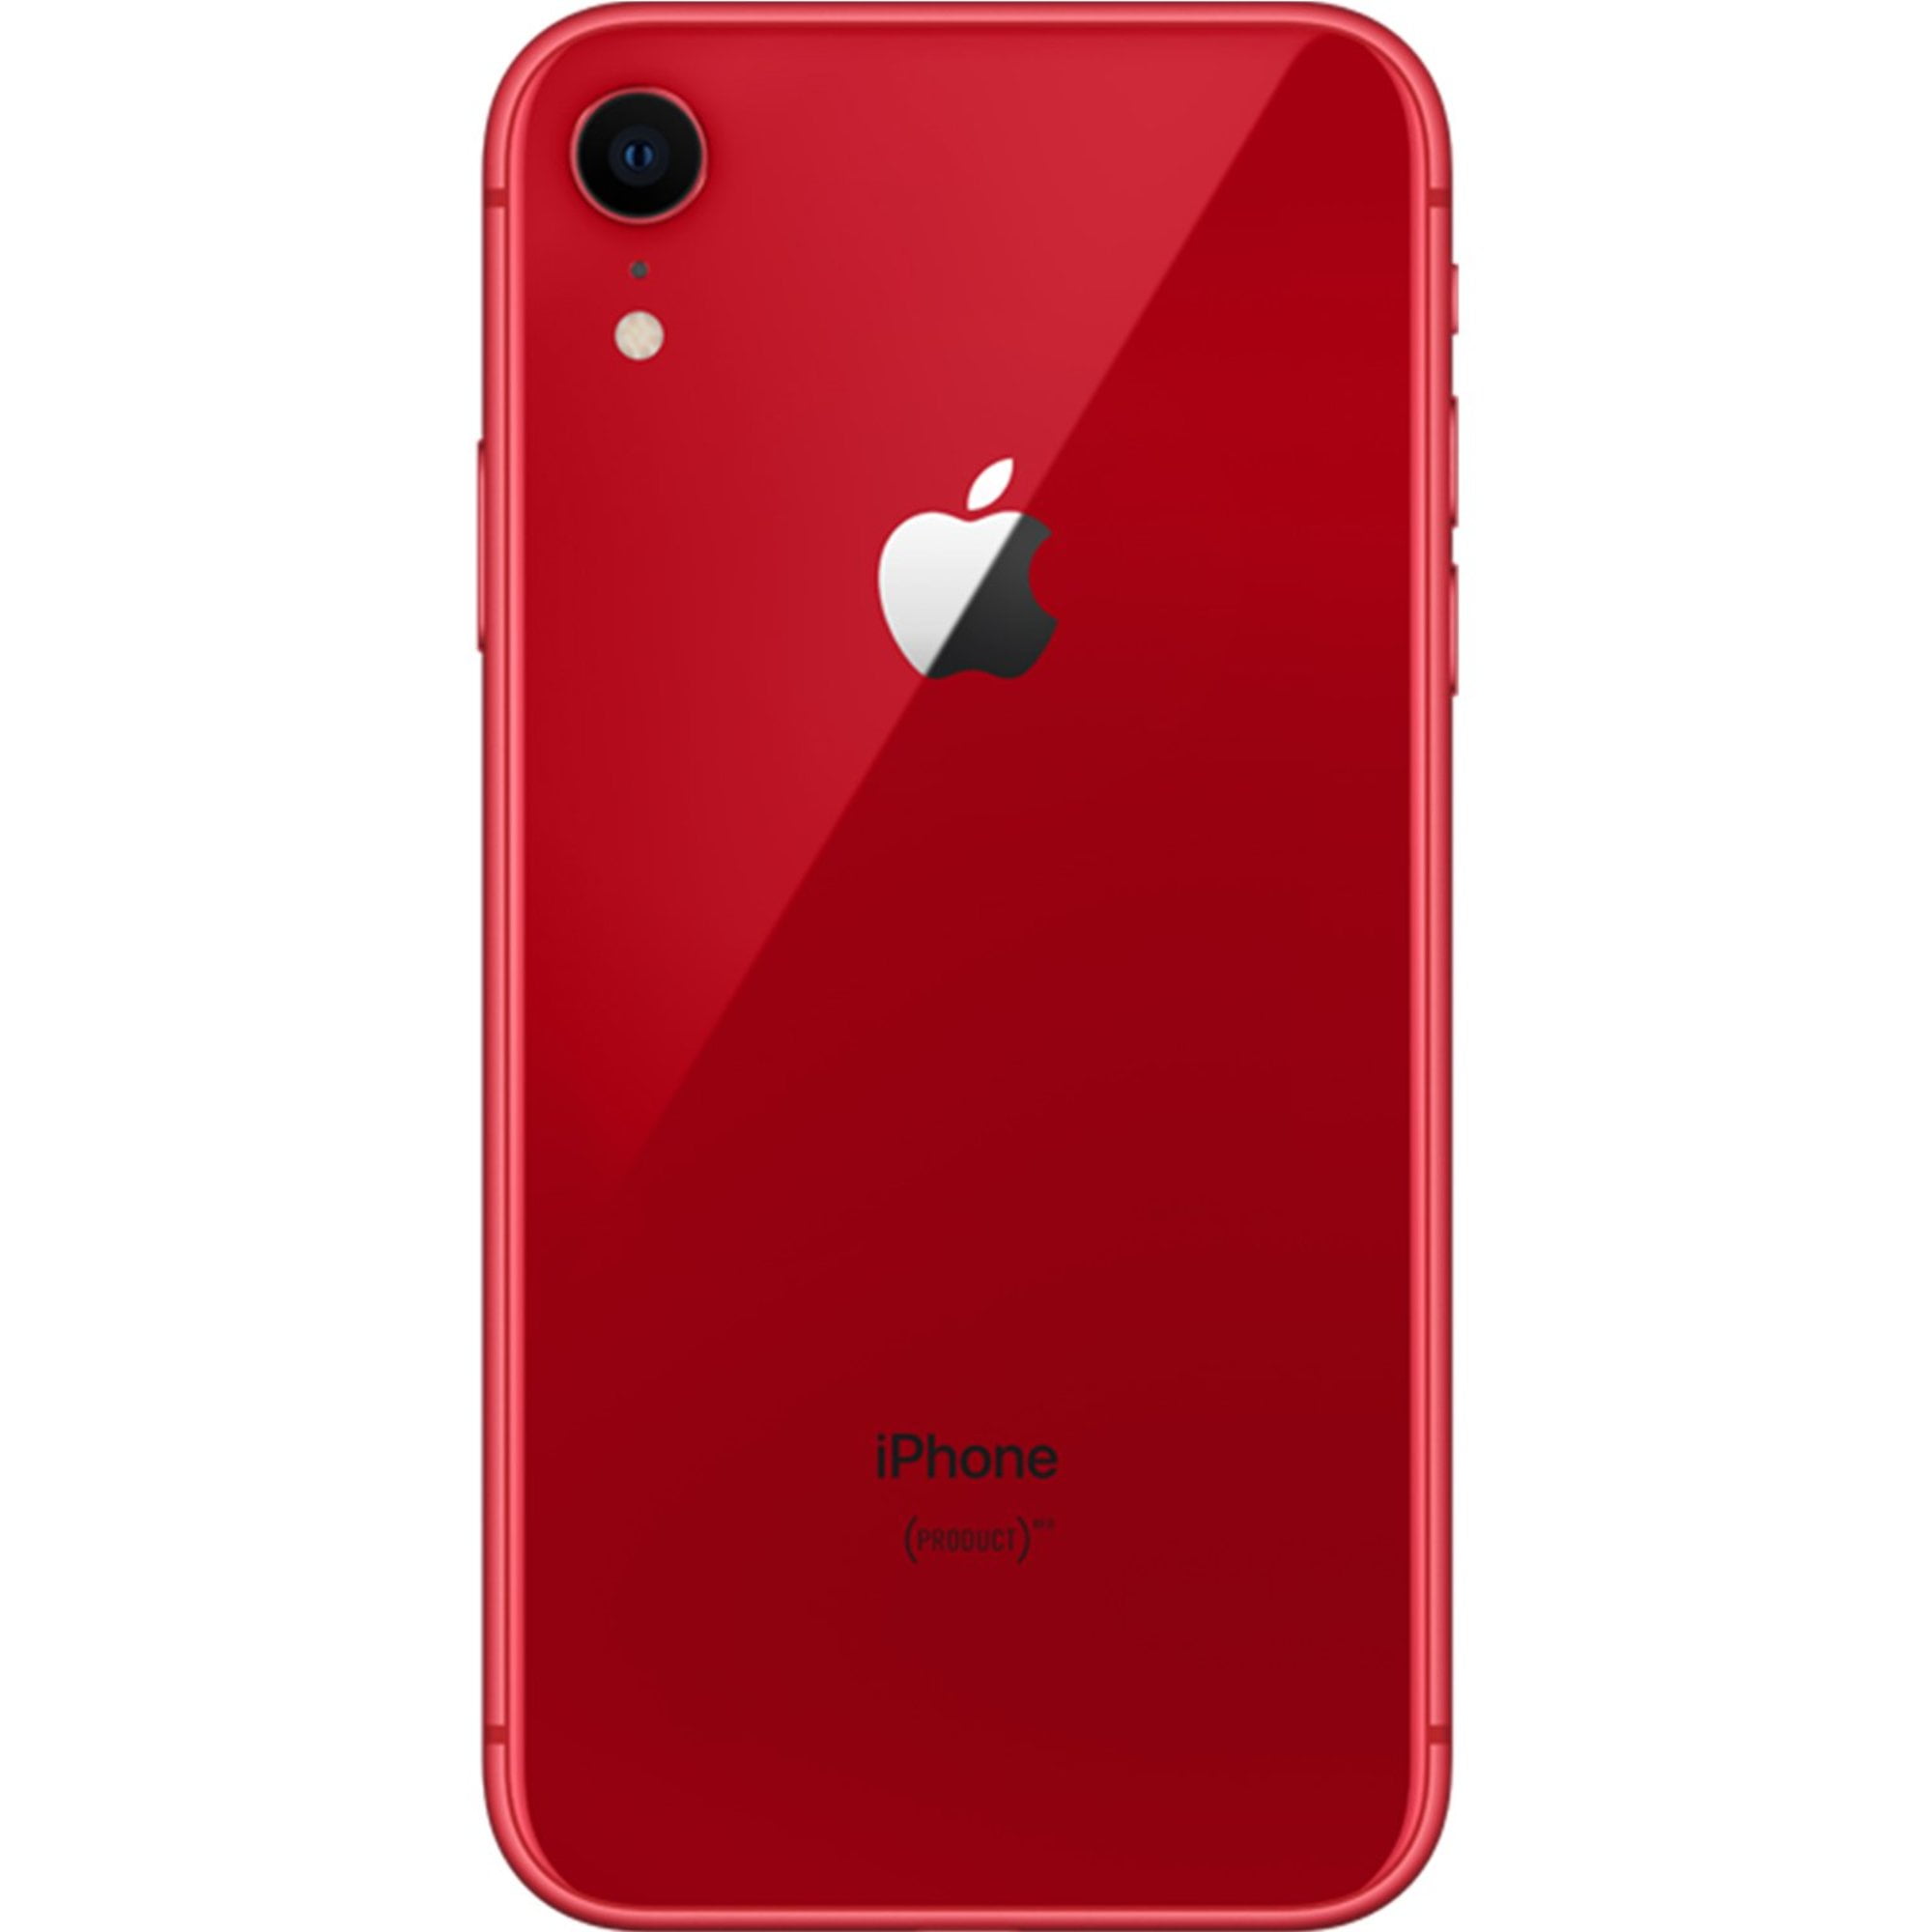 Apple iPhone XR 64GB Fully Unlocked (Verizon + Sprint + GSM Unlocked) - Red  (Poor Cosmetics, Fully Functional)